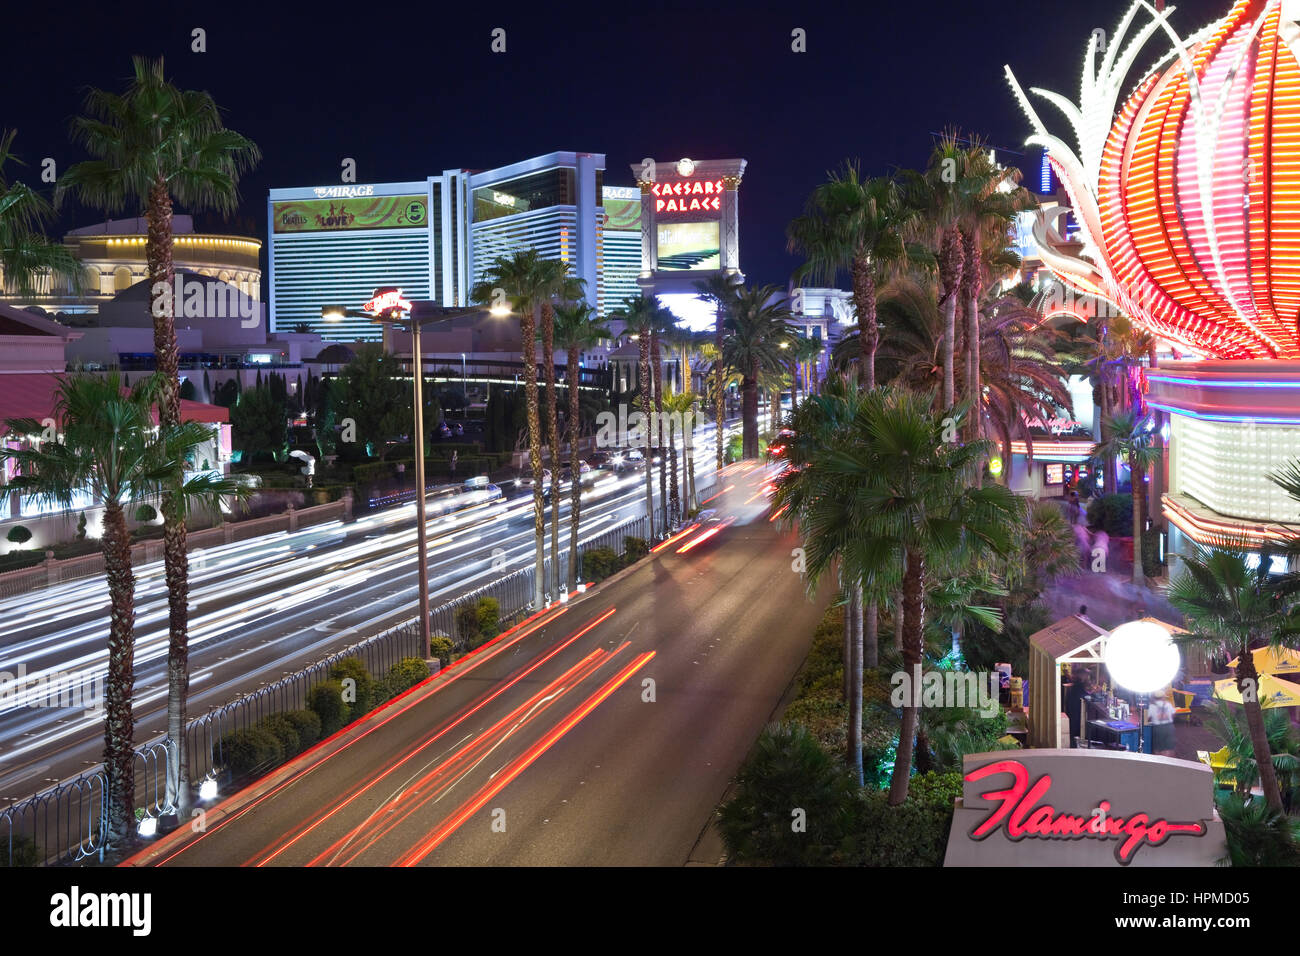 Las Vegas, Nevada, USA - 21. Oktober 2011: Nachtverkehr an der Flamingo, Ceasars Palace und anderen Resorts am Las Vegas Strip. Stockfoto